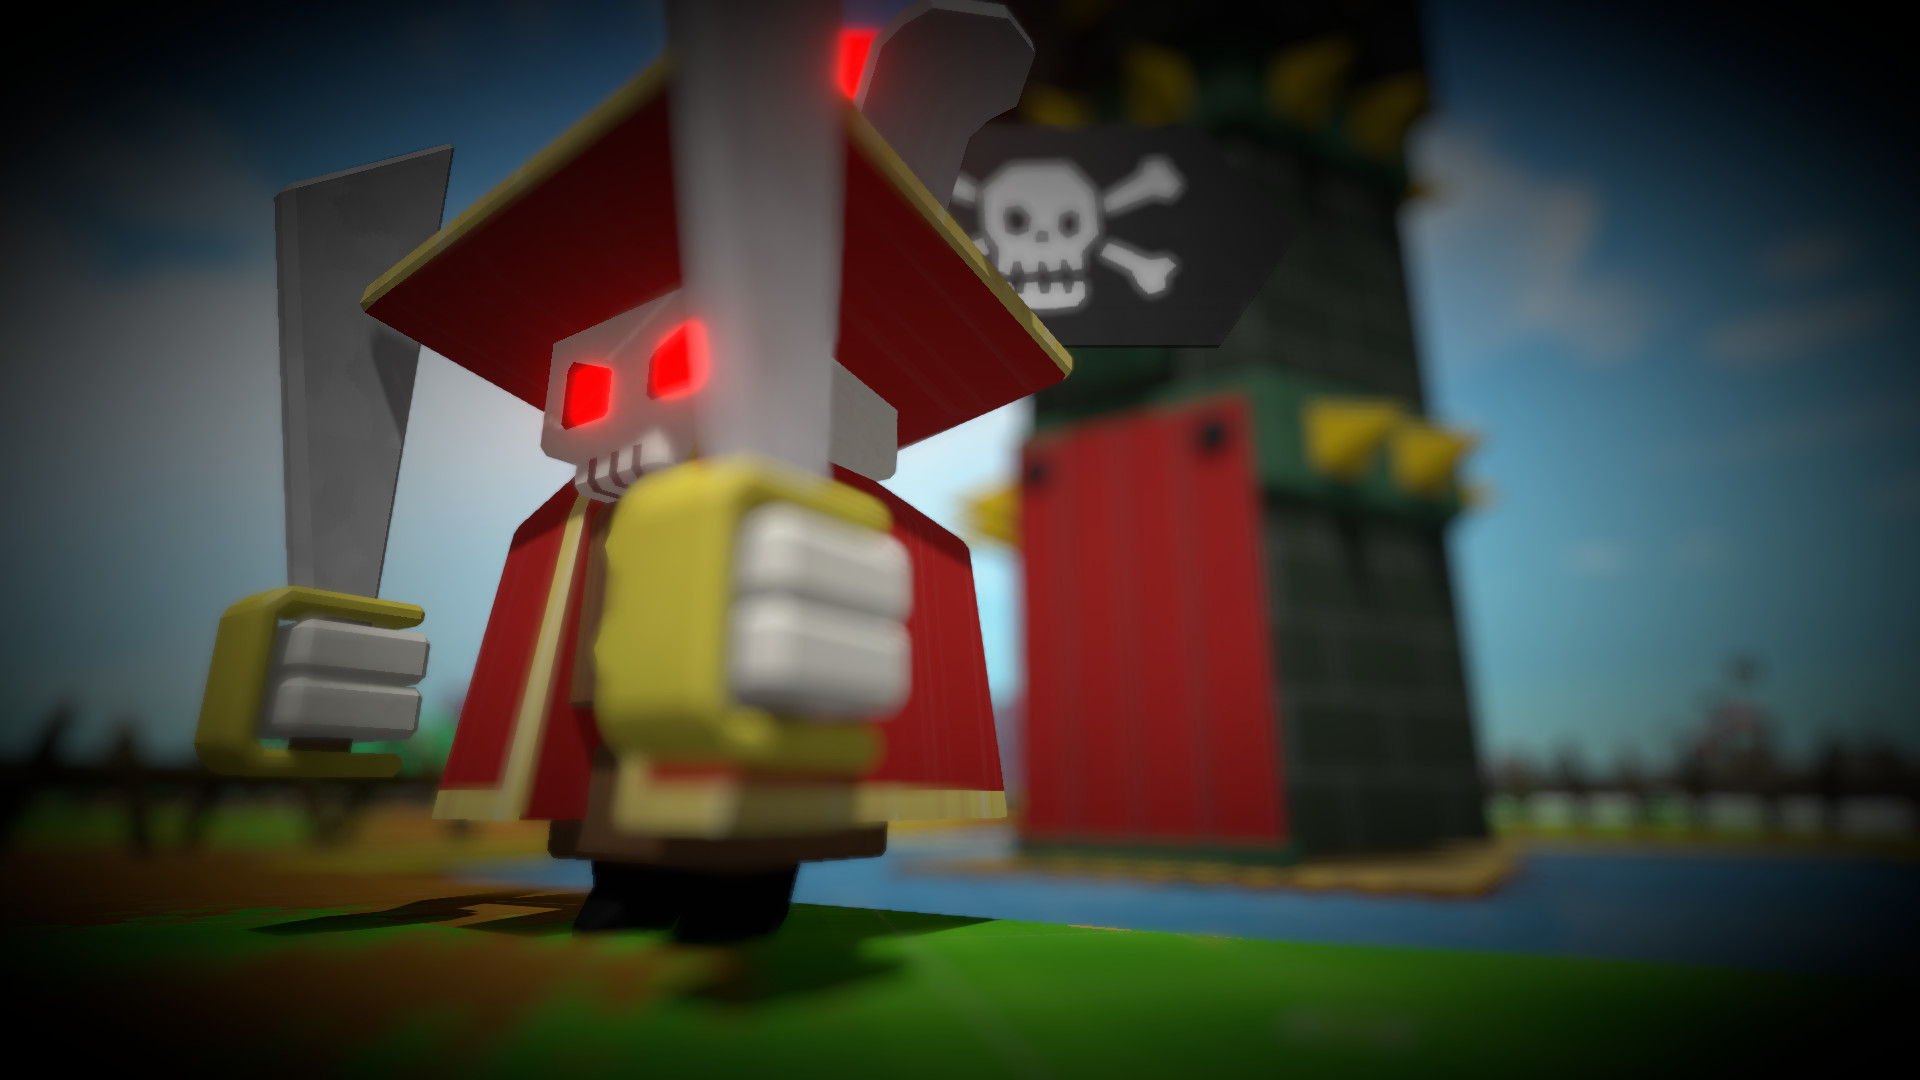 Autonauts vs Piratebots | OCE (83585288-042d-4c86-b3d9-955c225ecf45)